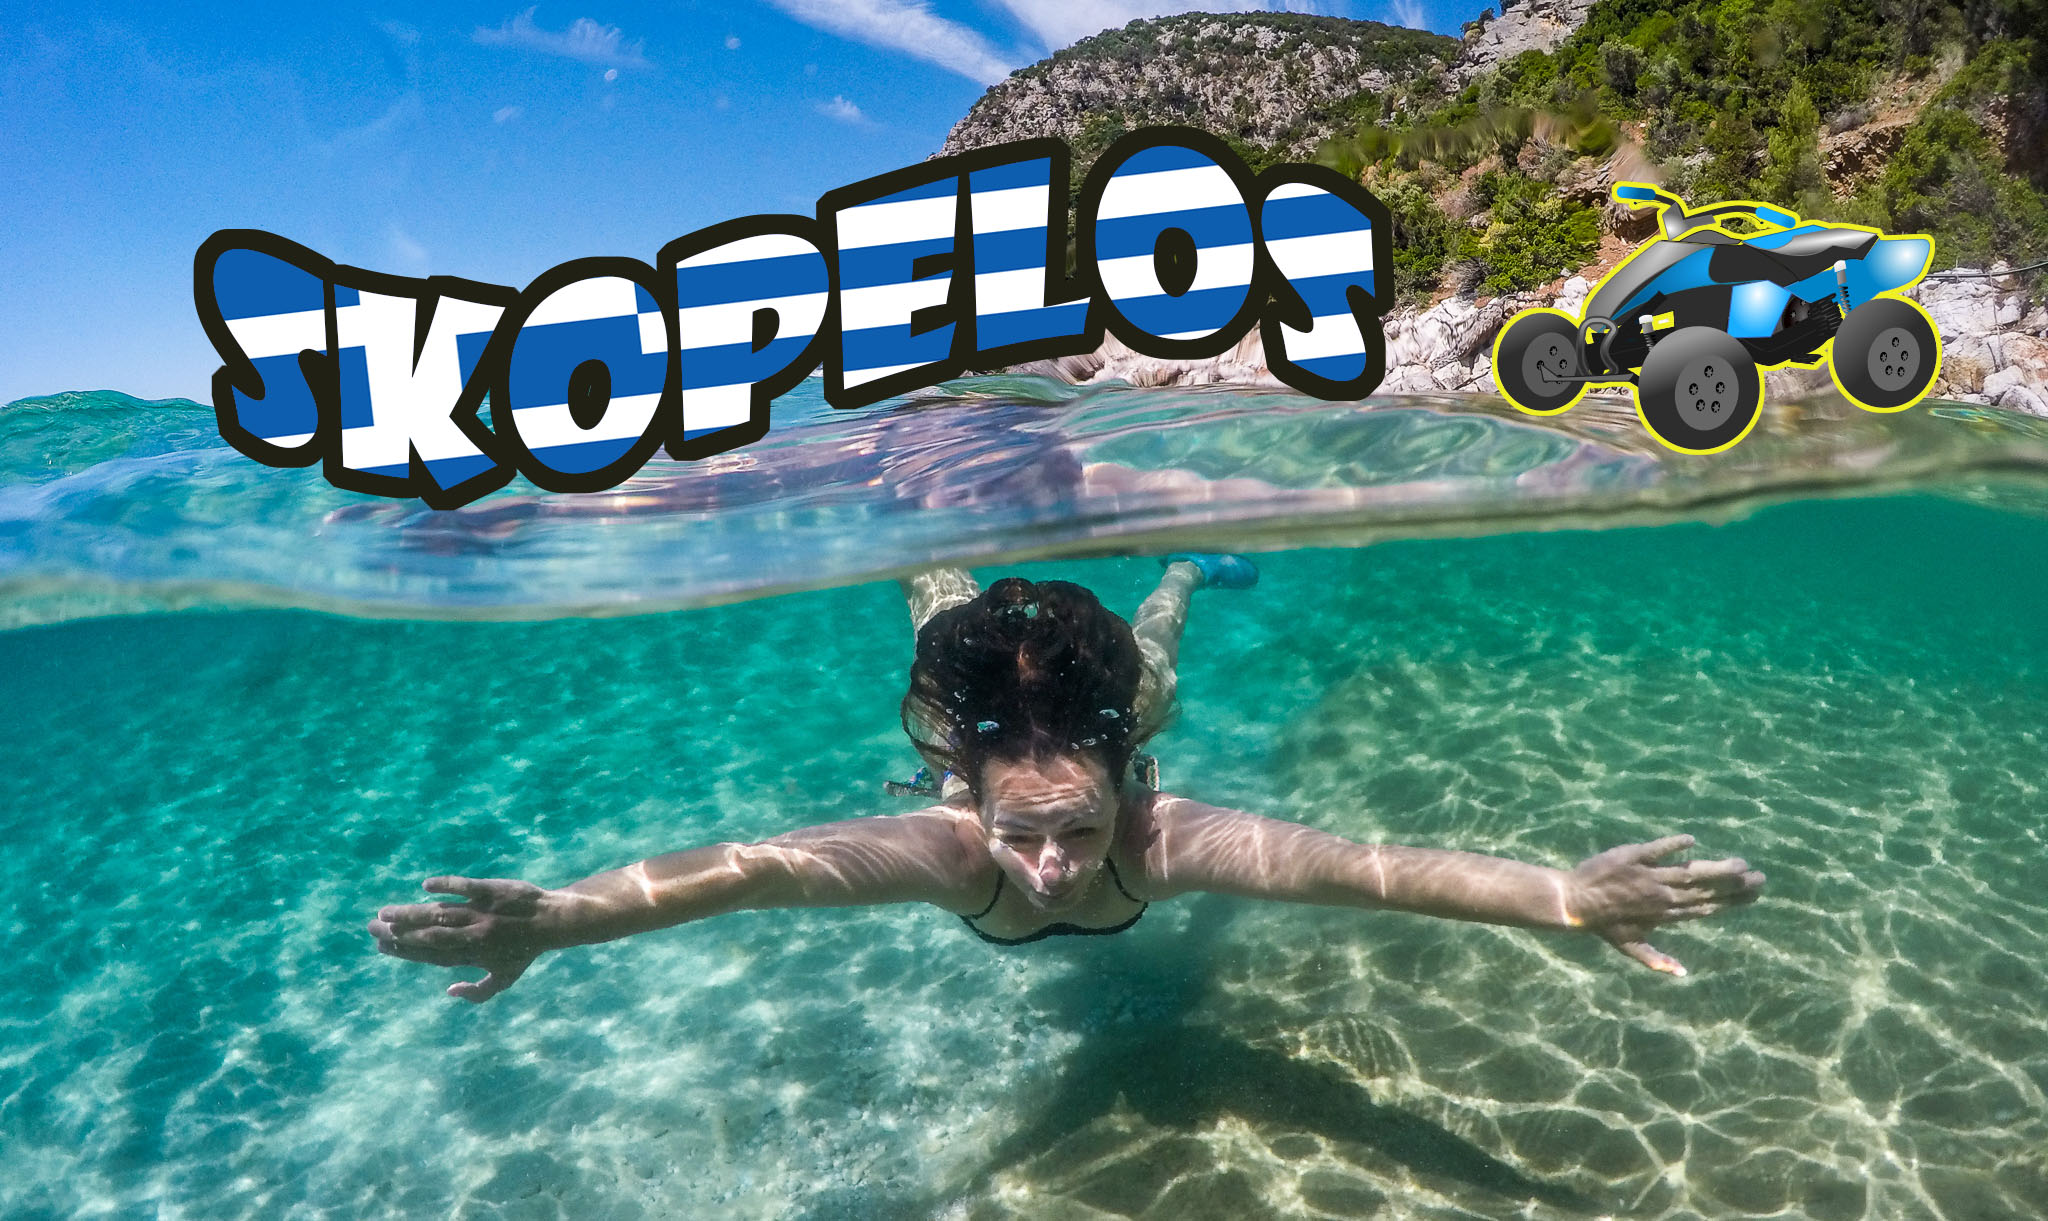 Photo-Trip to Greece: Skopelos